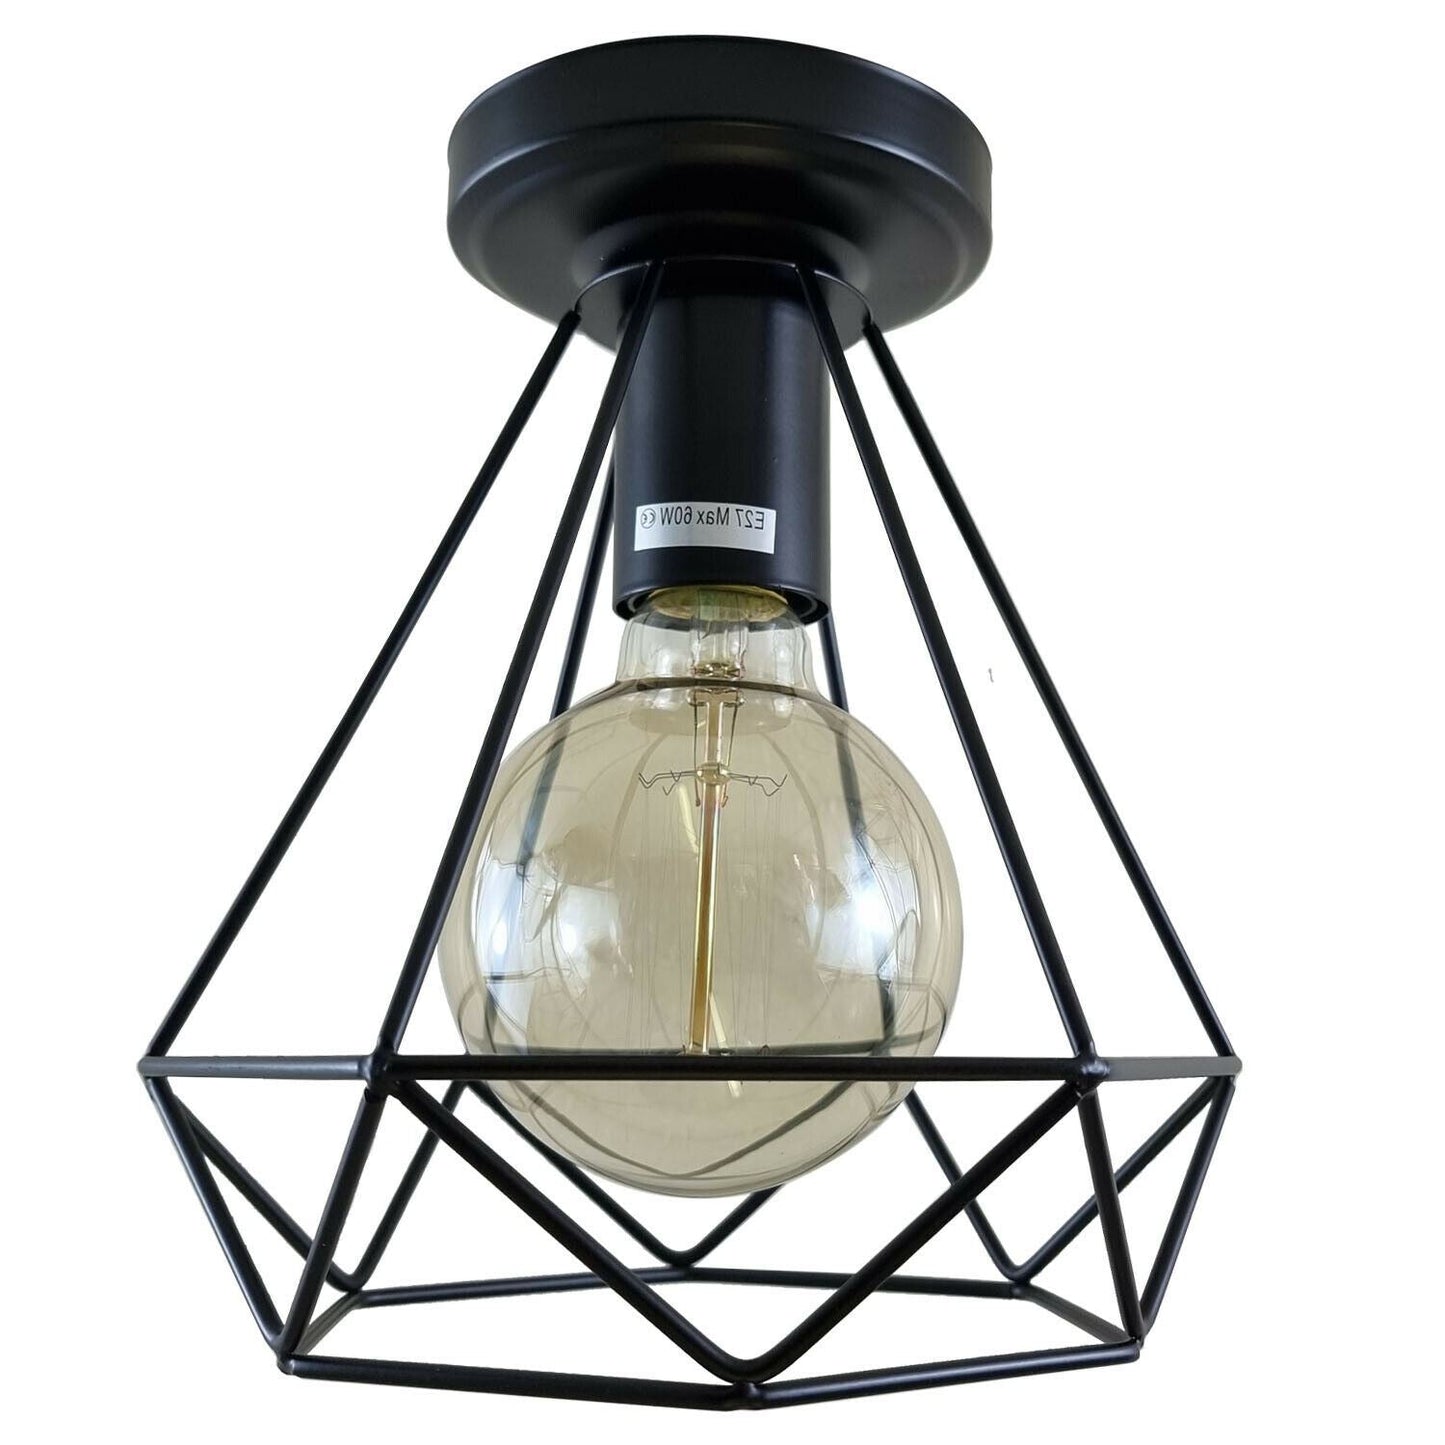 Vintage Industrial Retro Style Flush Ceiling Light Lamp Black